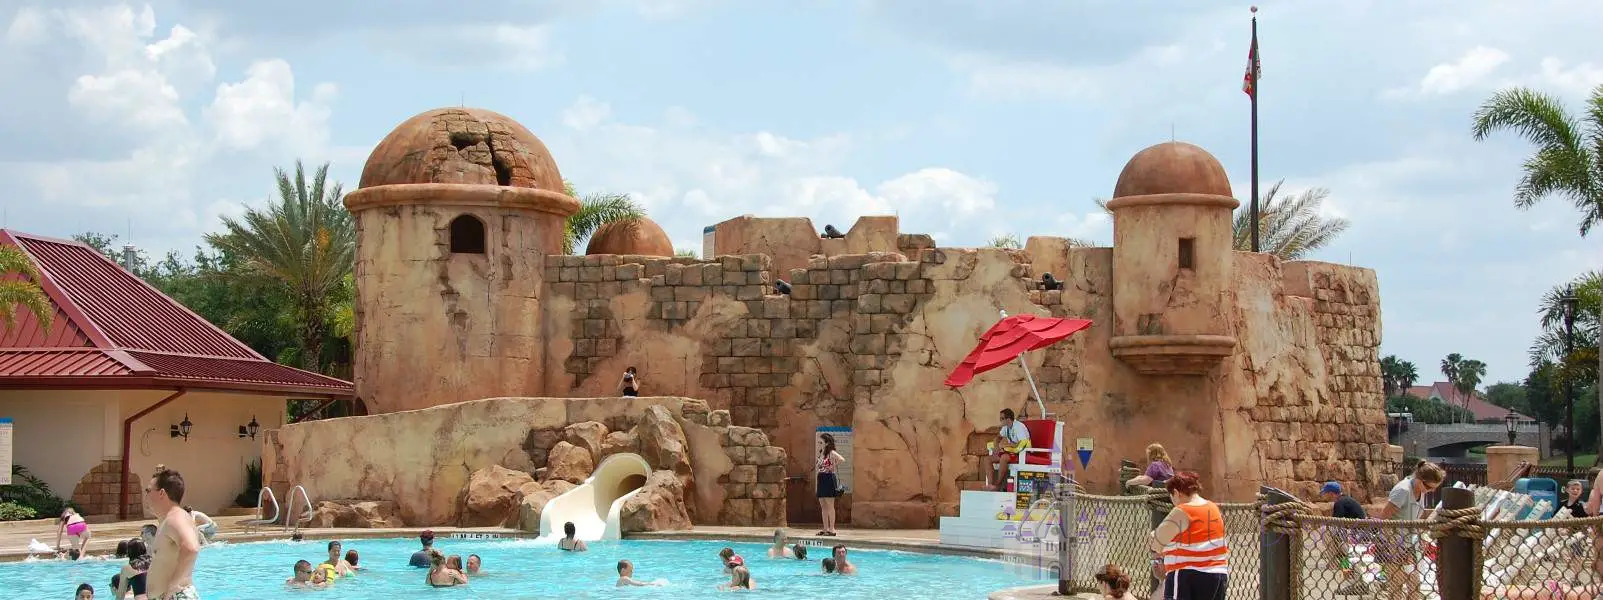 O Caribbean Beach Resort leva o Caribe para a Disney!